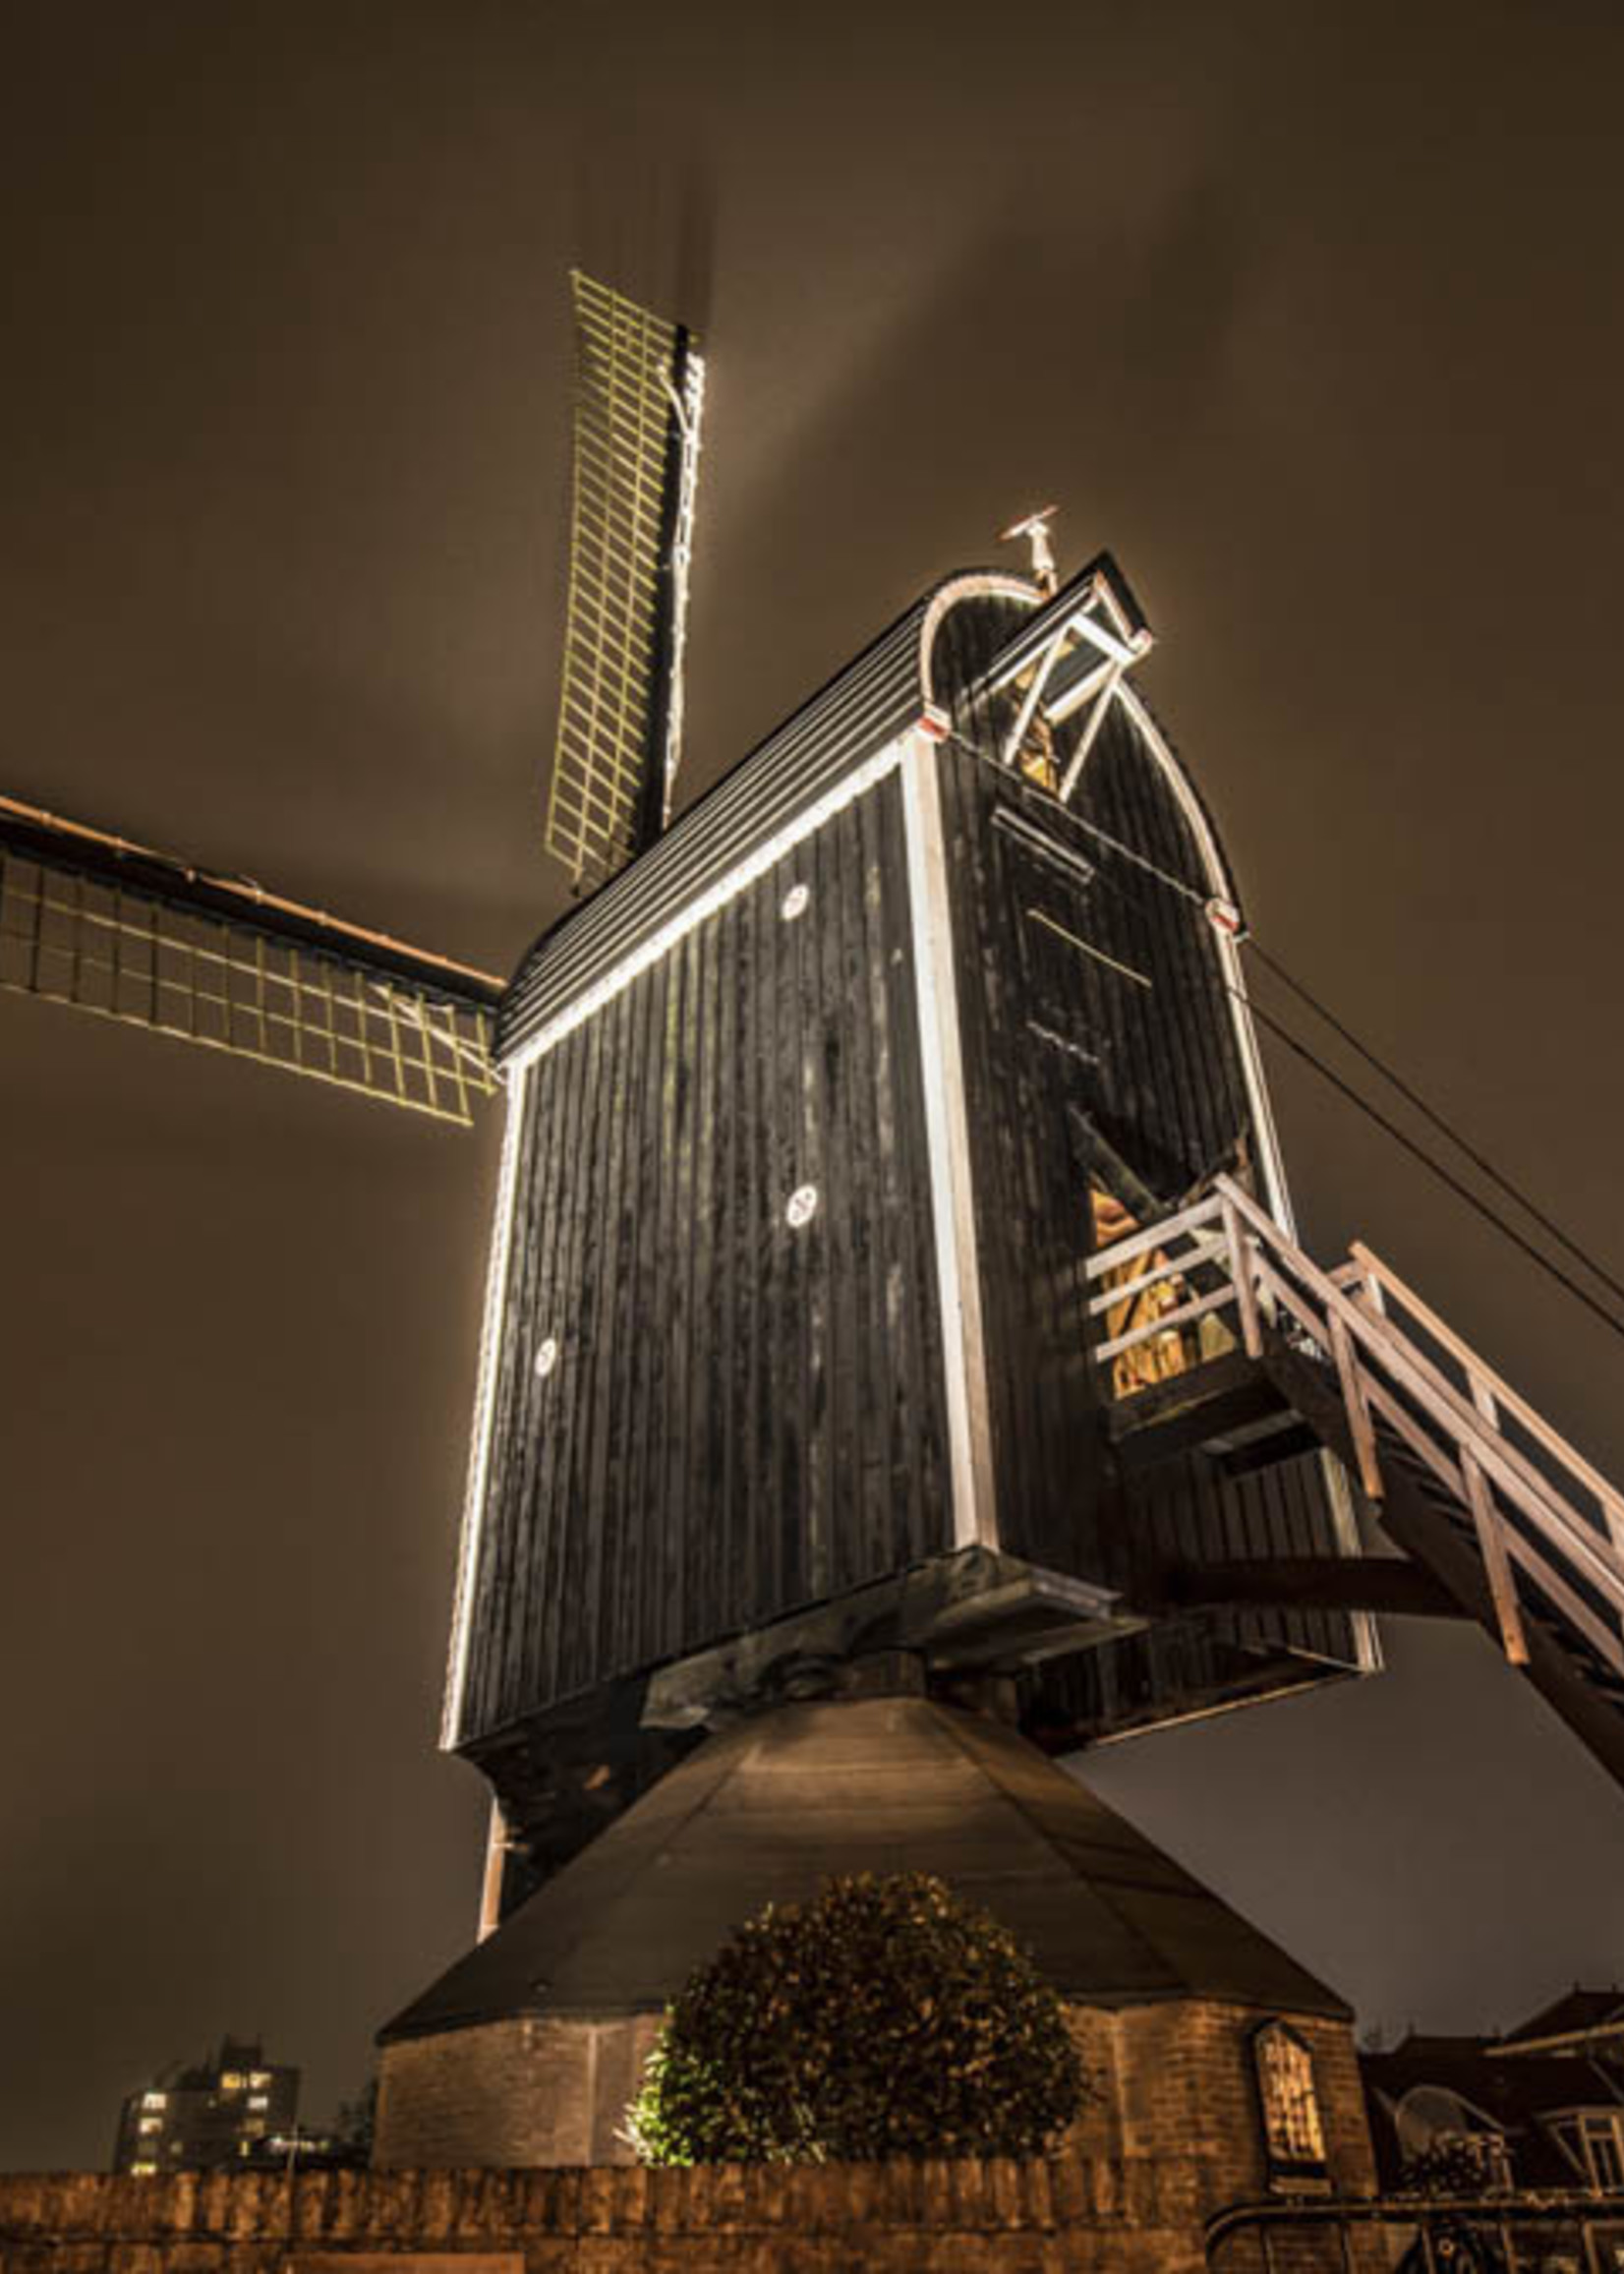 Frans van Steijn Wall photo "Misty Windmill" Aluminum on Dibond 120 cm